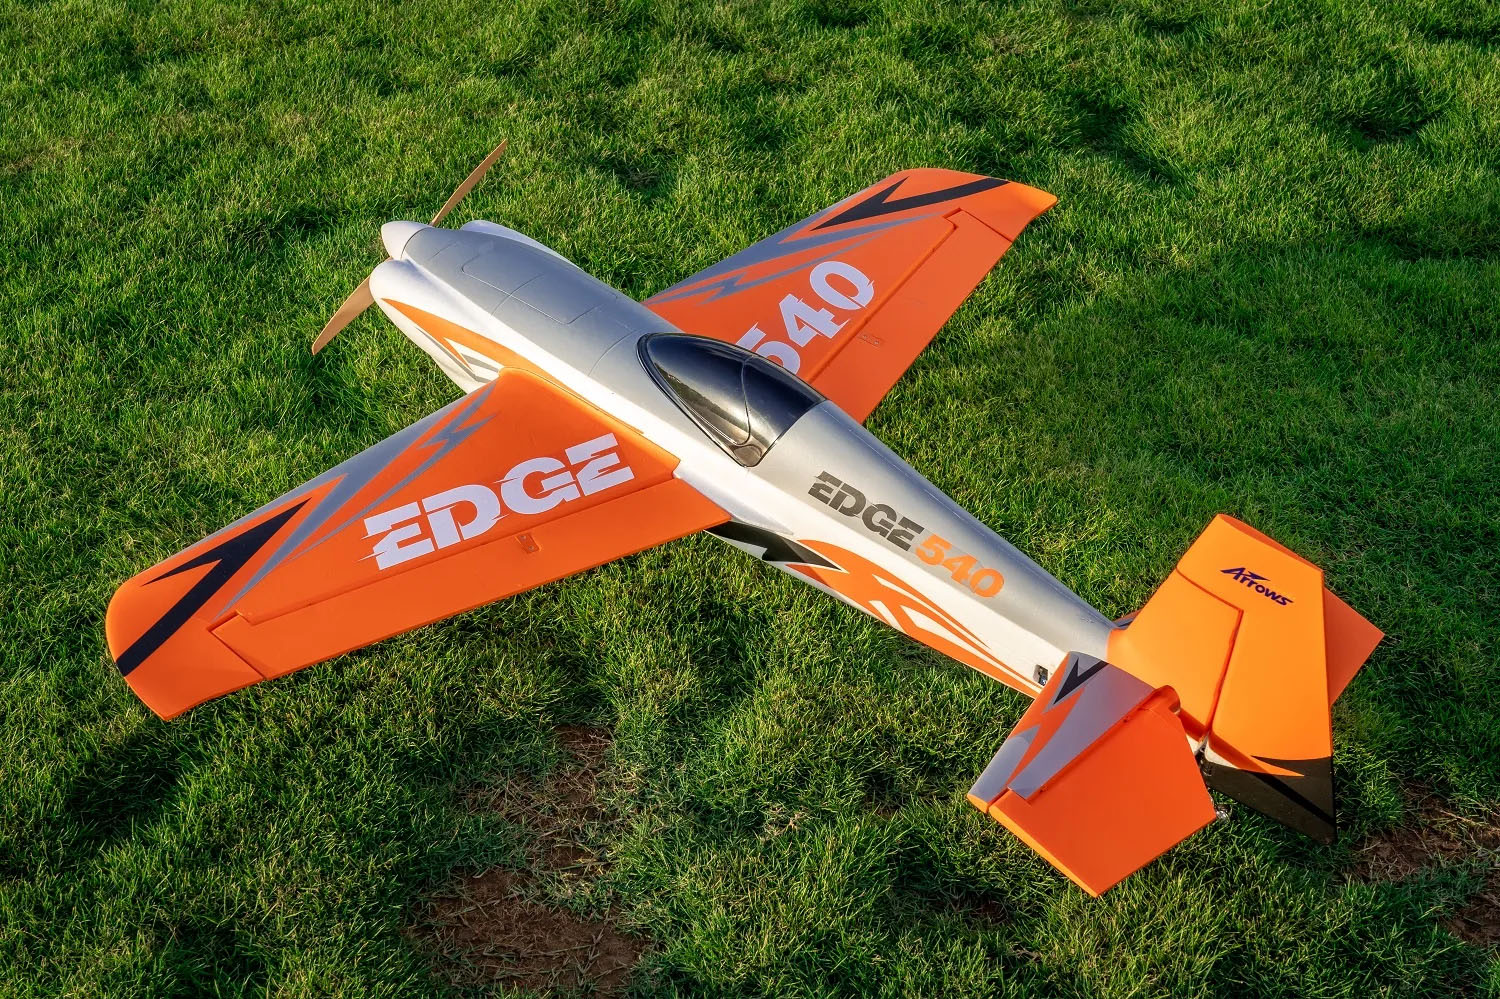 Edge 540 Arrows RC